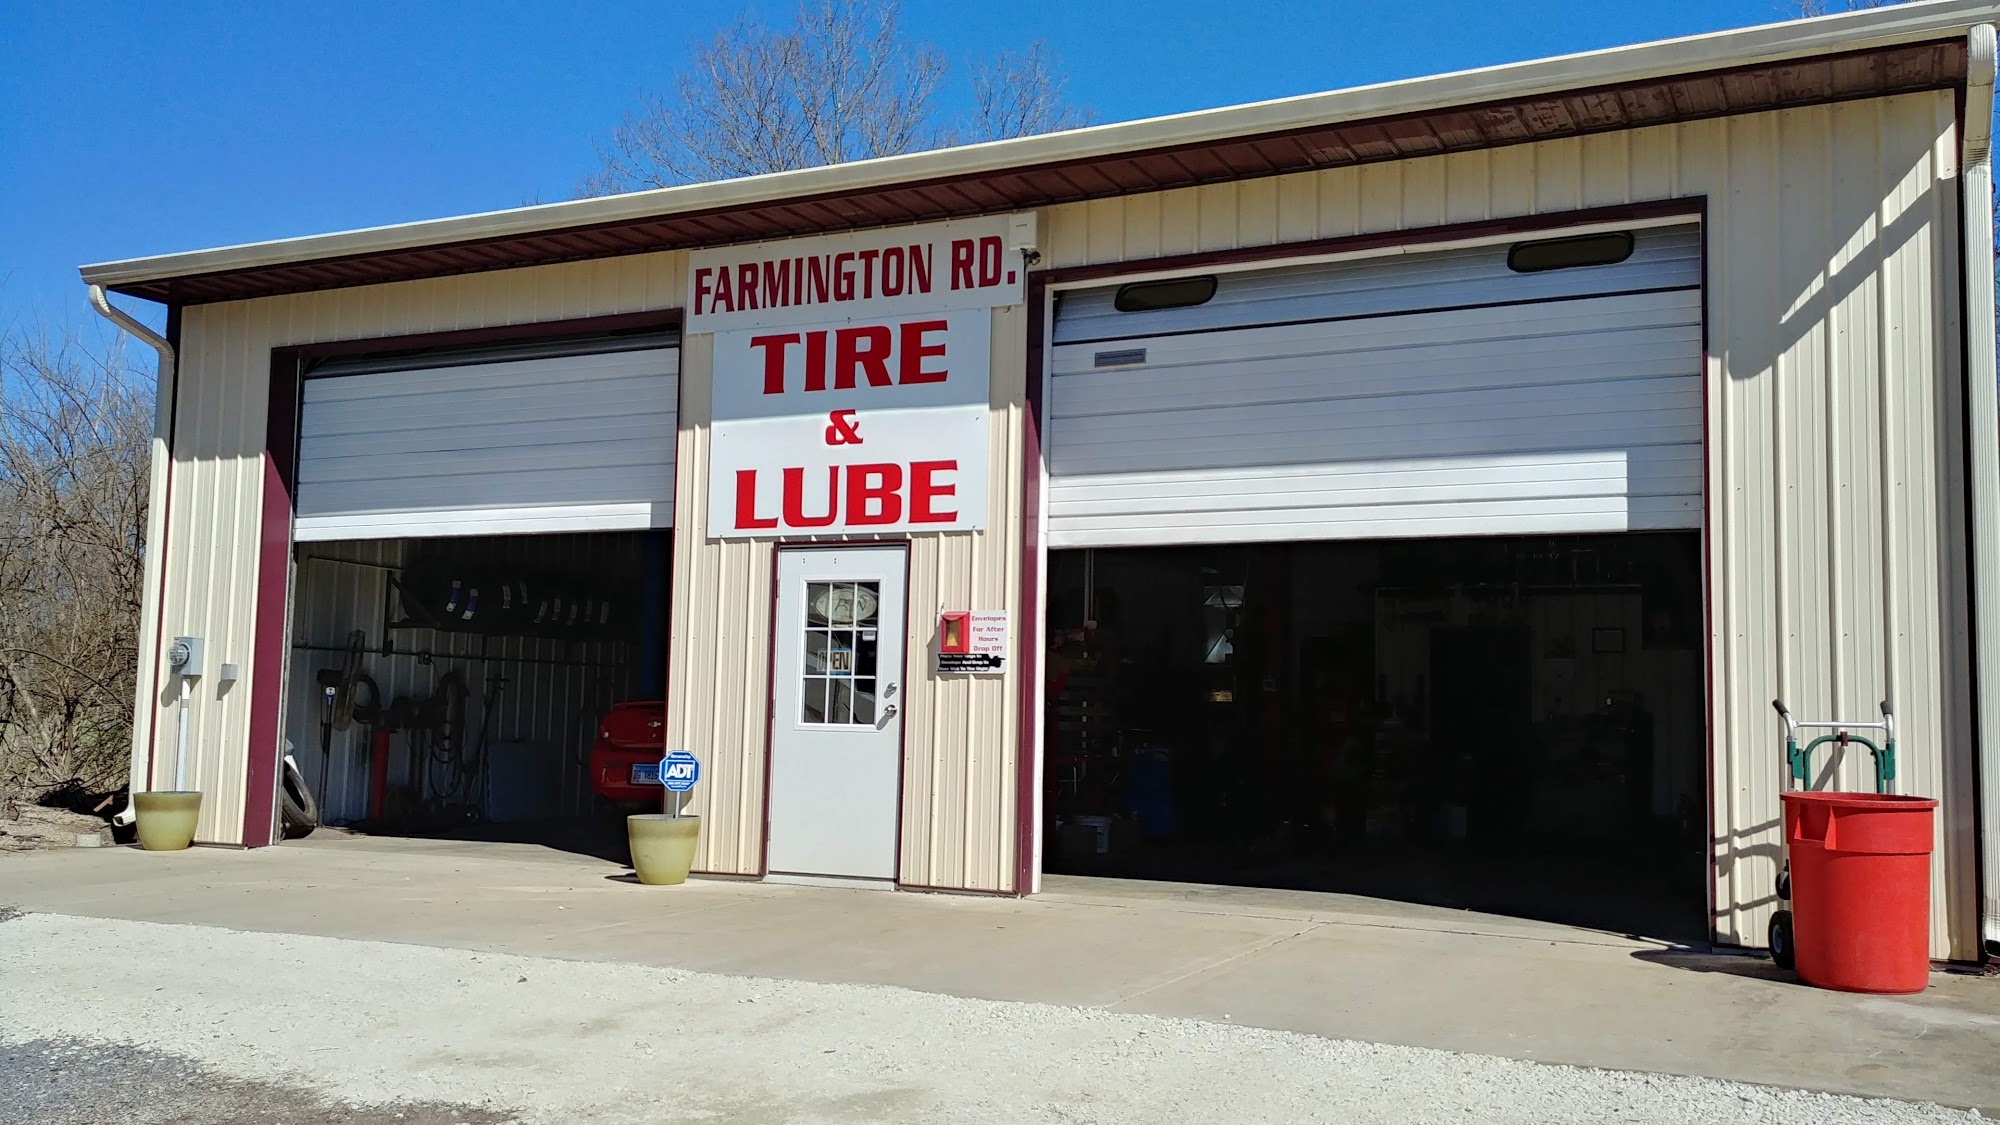 Farmington rd tire